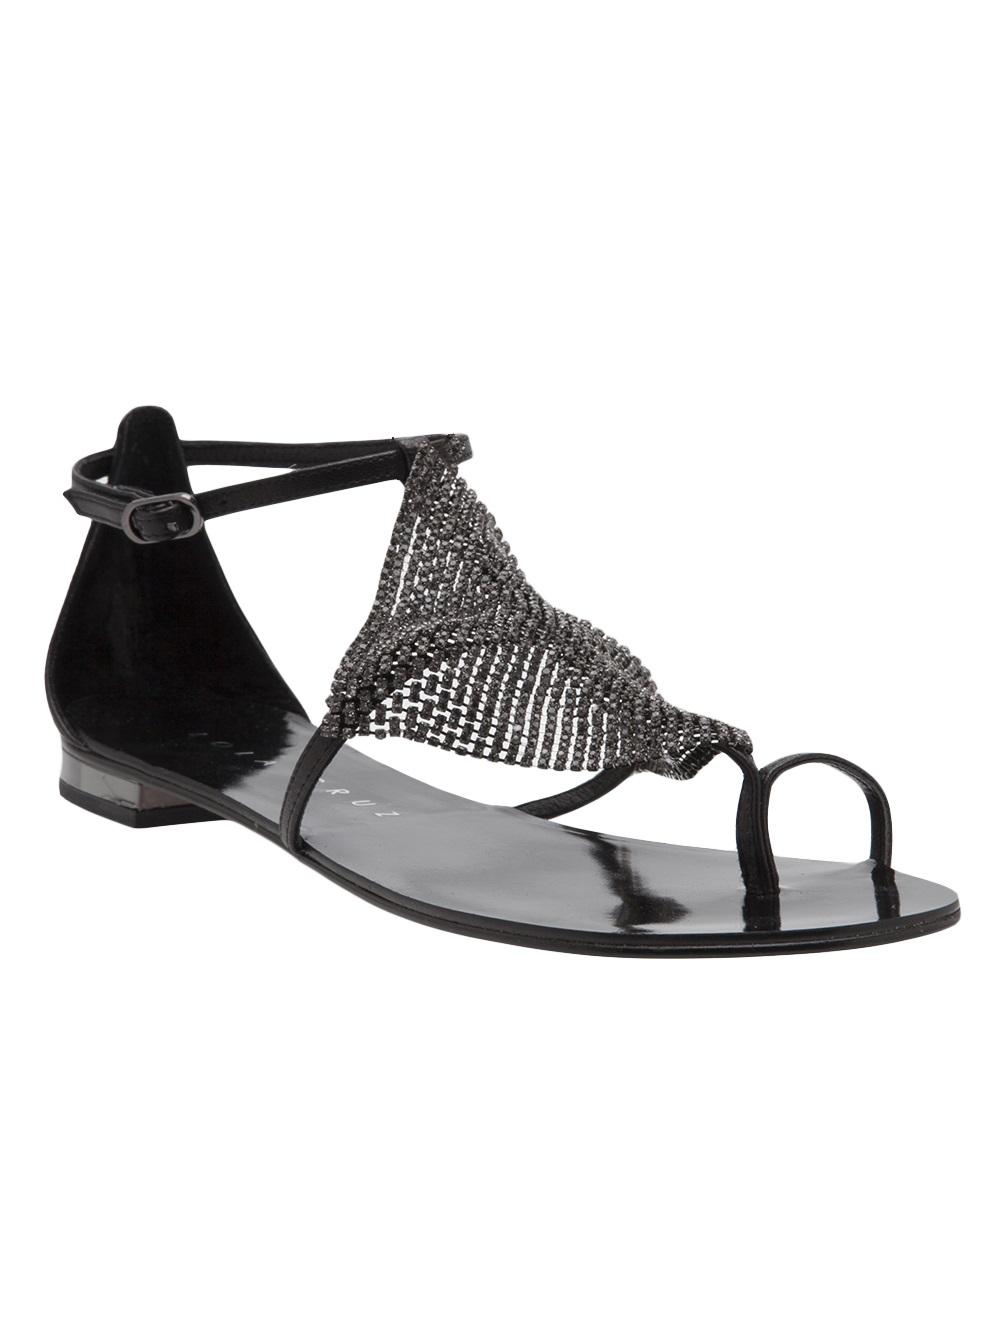 Lyst - Lola Cruz Crystal Embellished Sandal in Black